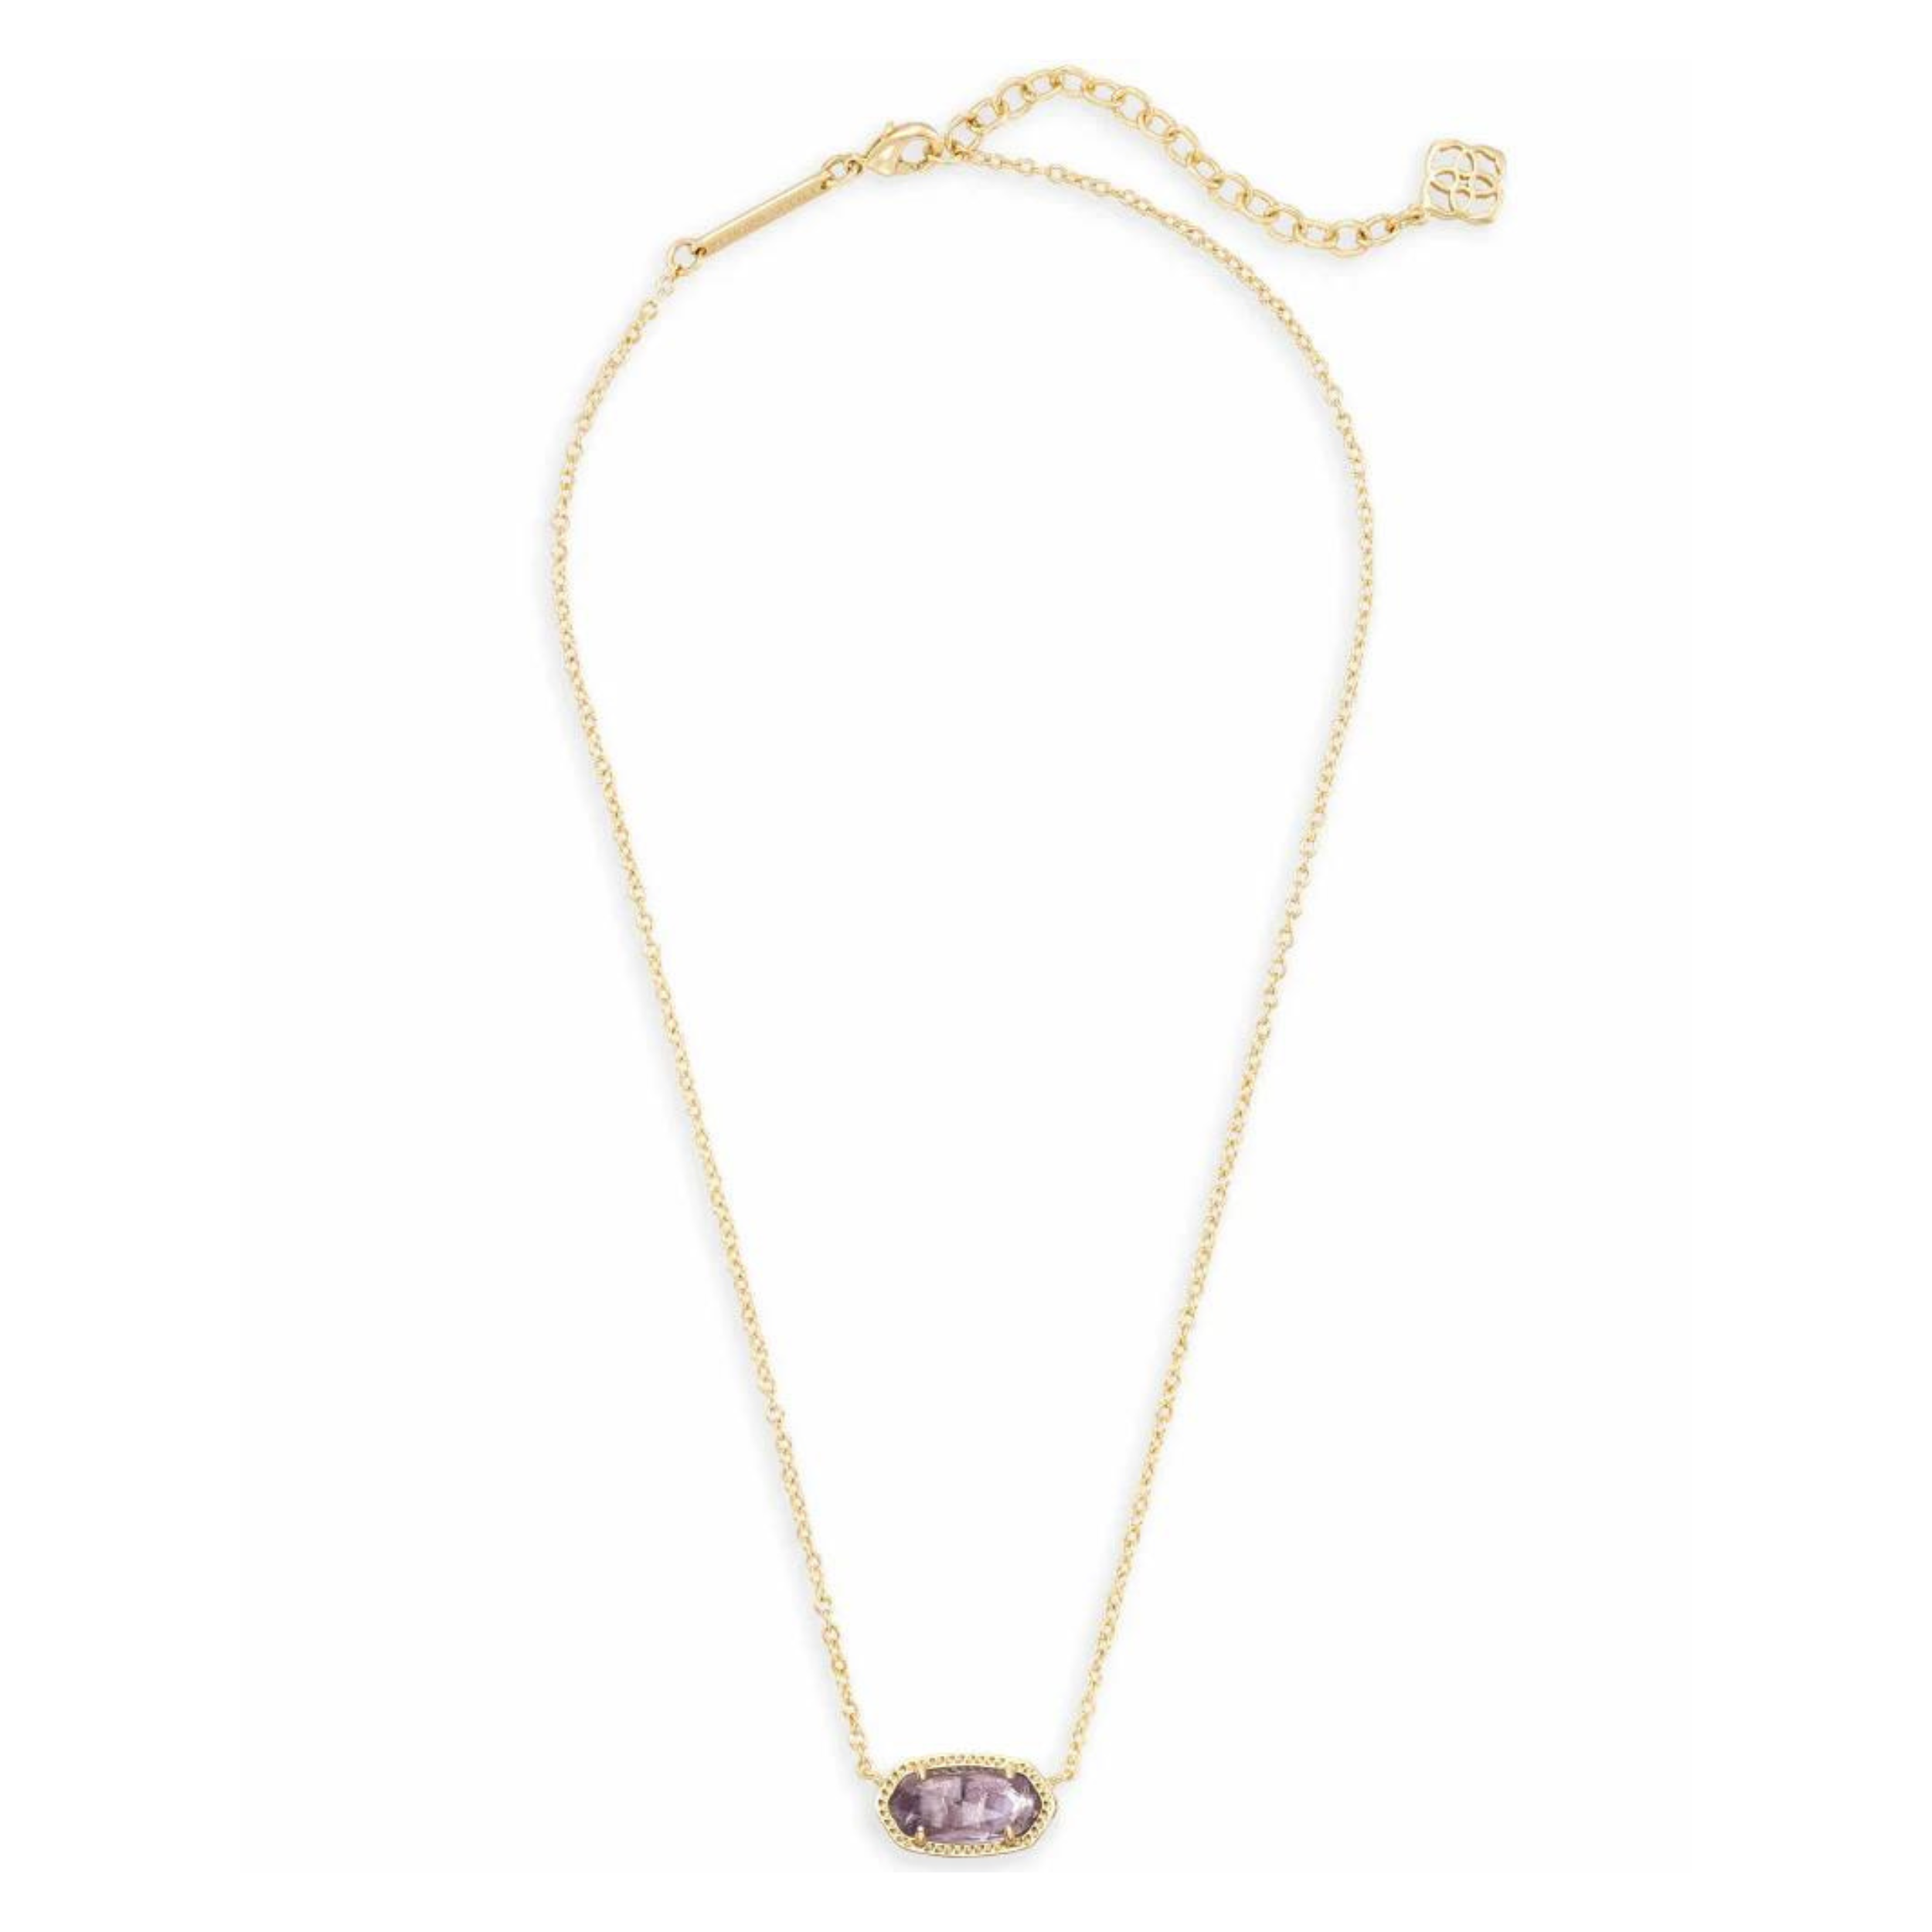 Kendra Scott | Elisa Gold Short Pendant Necklace In Purple Amethyst - Giddy Up Glamour Boutique